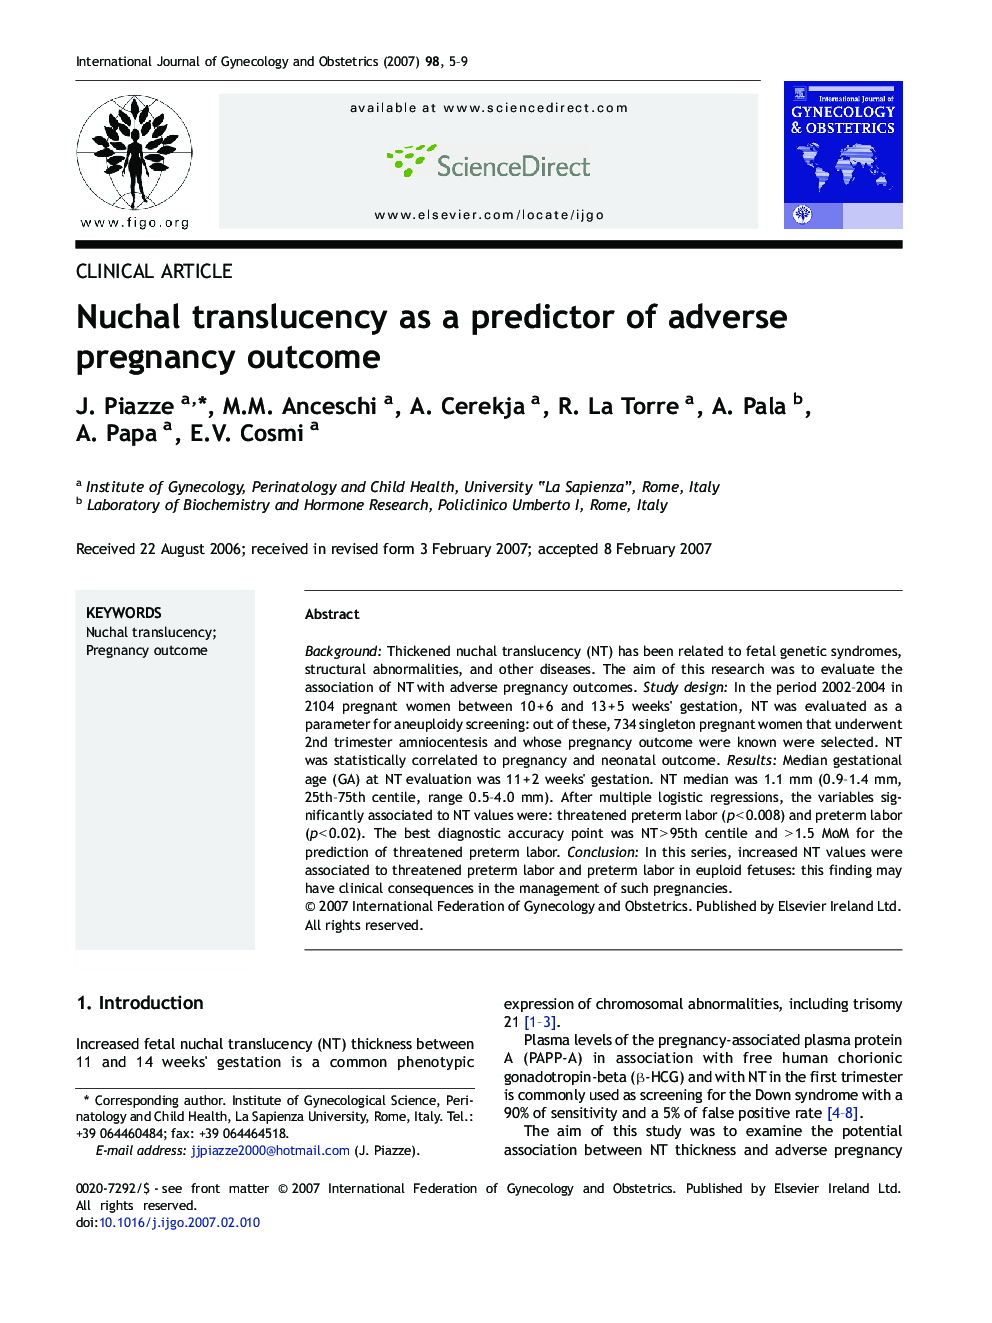 Nuchal translucency as a predictor of adverse pregnancy outcome